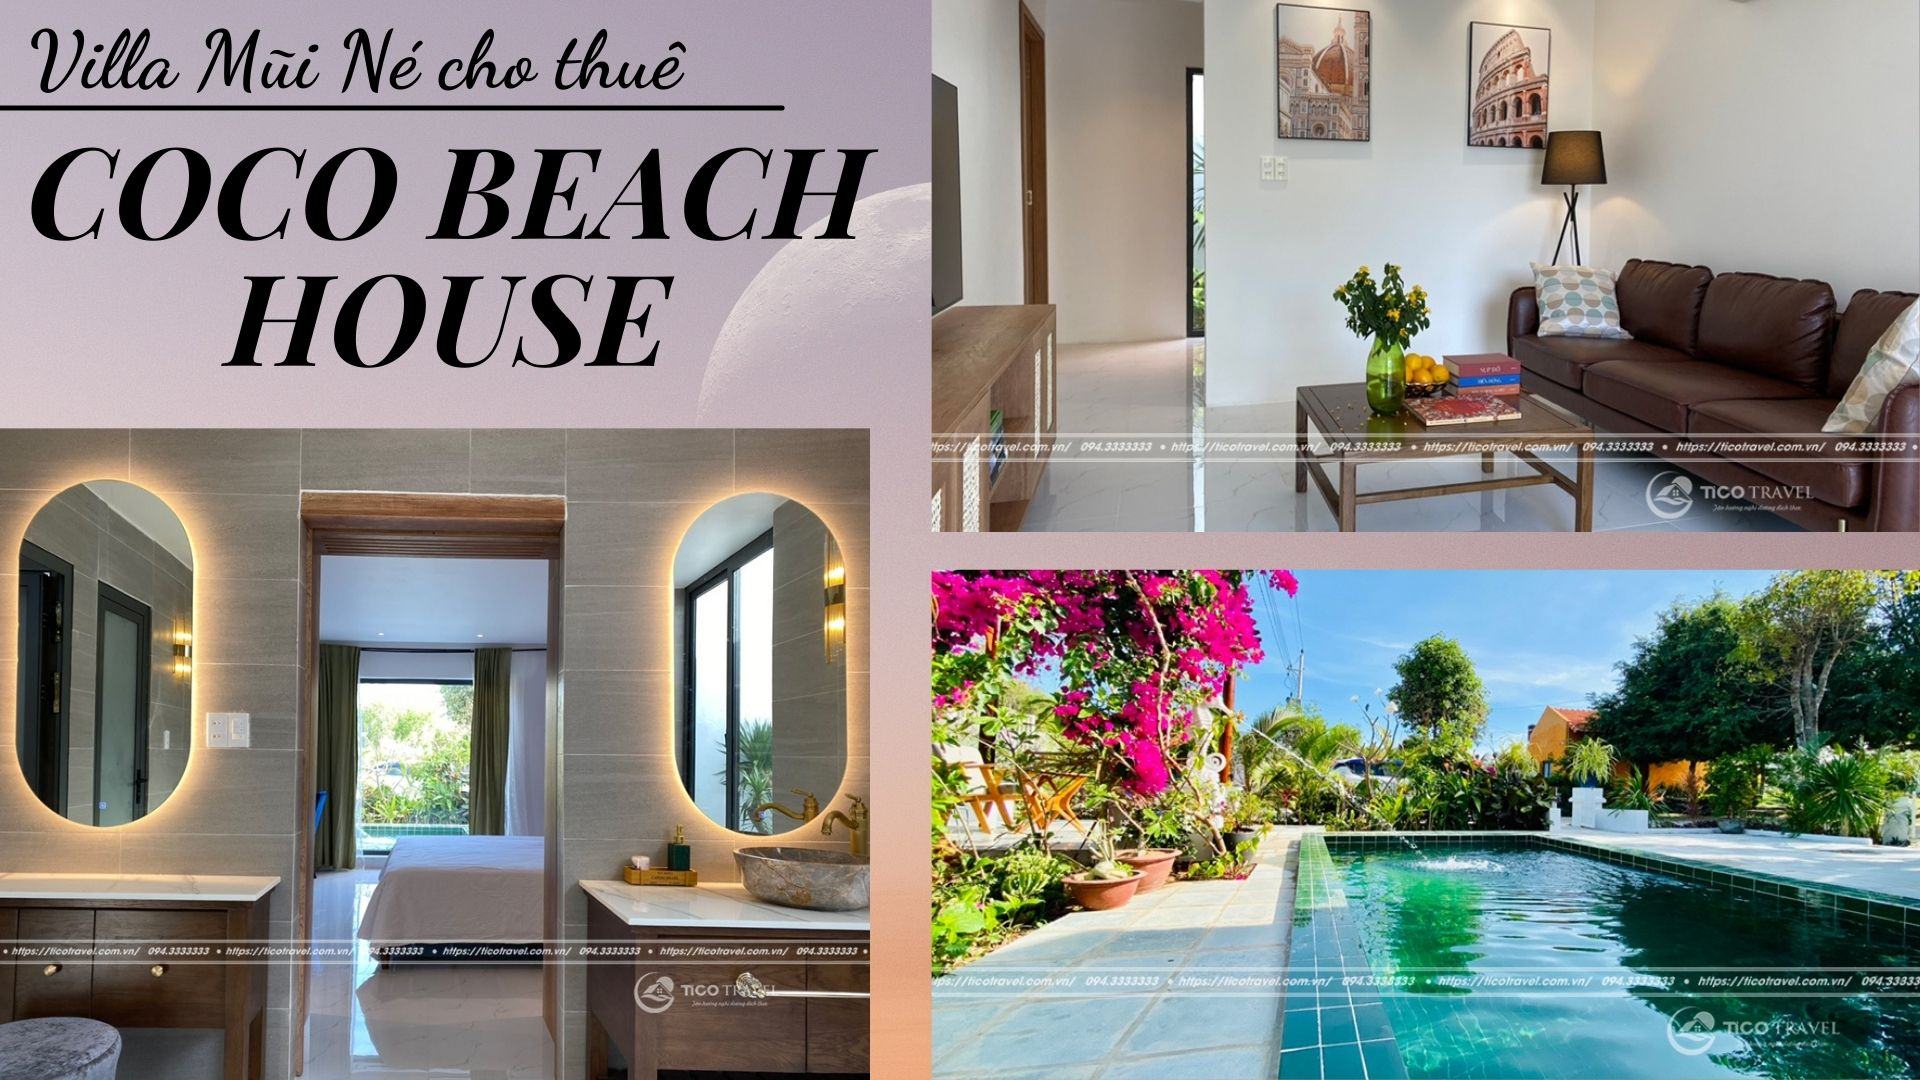 Coco Beach House Villa Mũi Né